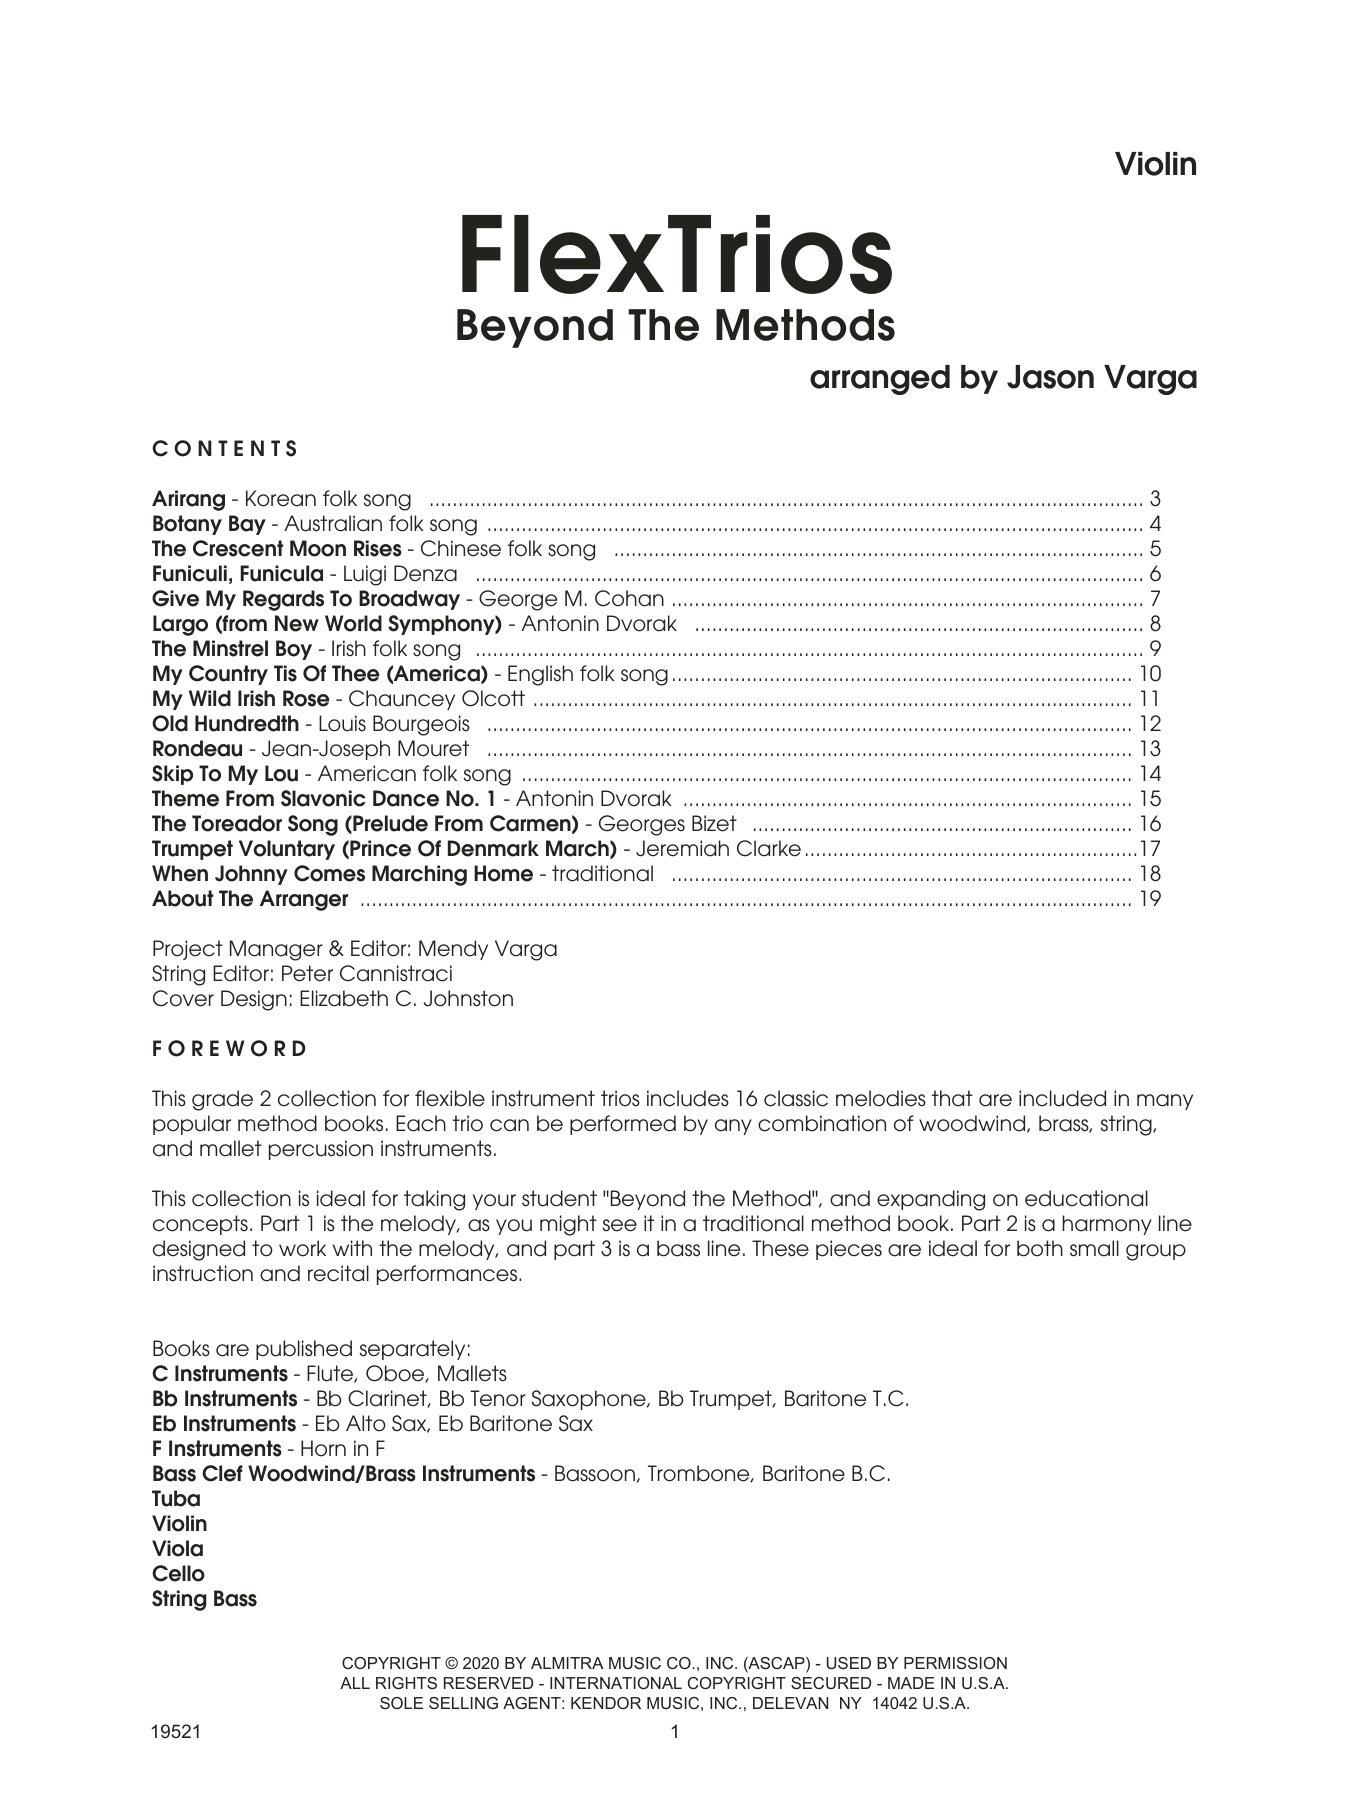 Flextrios - Beyond The Methods (16 Pieces) - Violin (String Ensemble) von Jason Varga